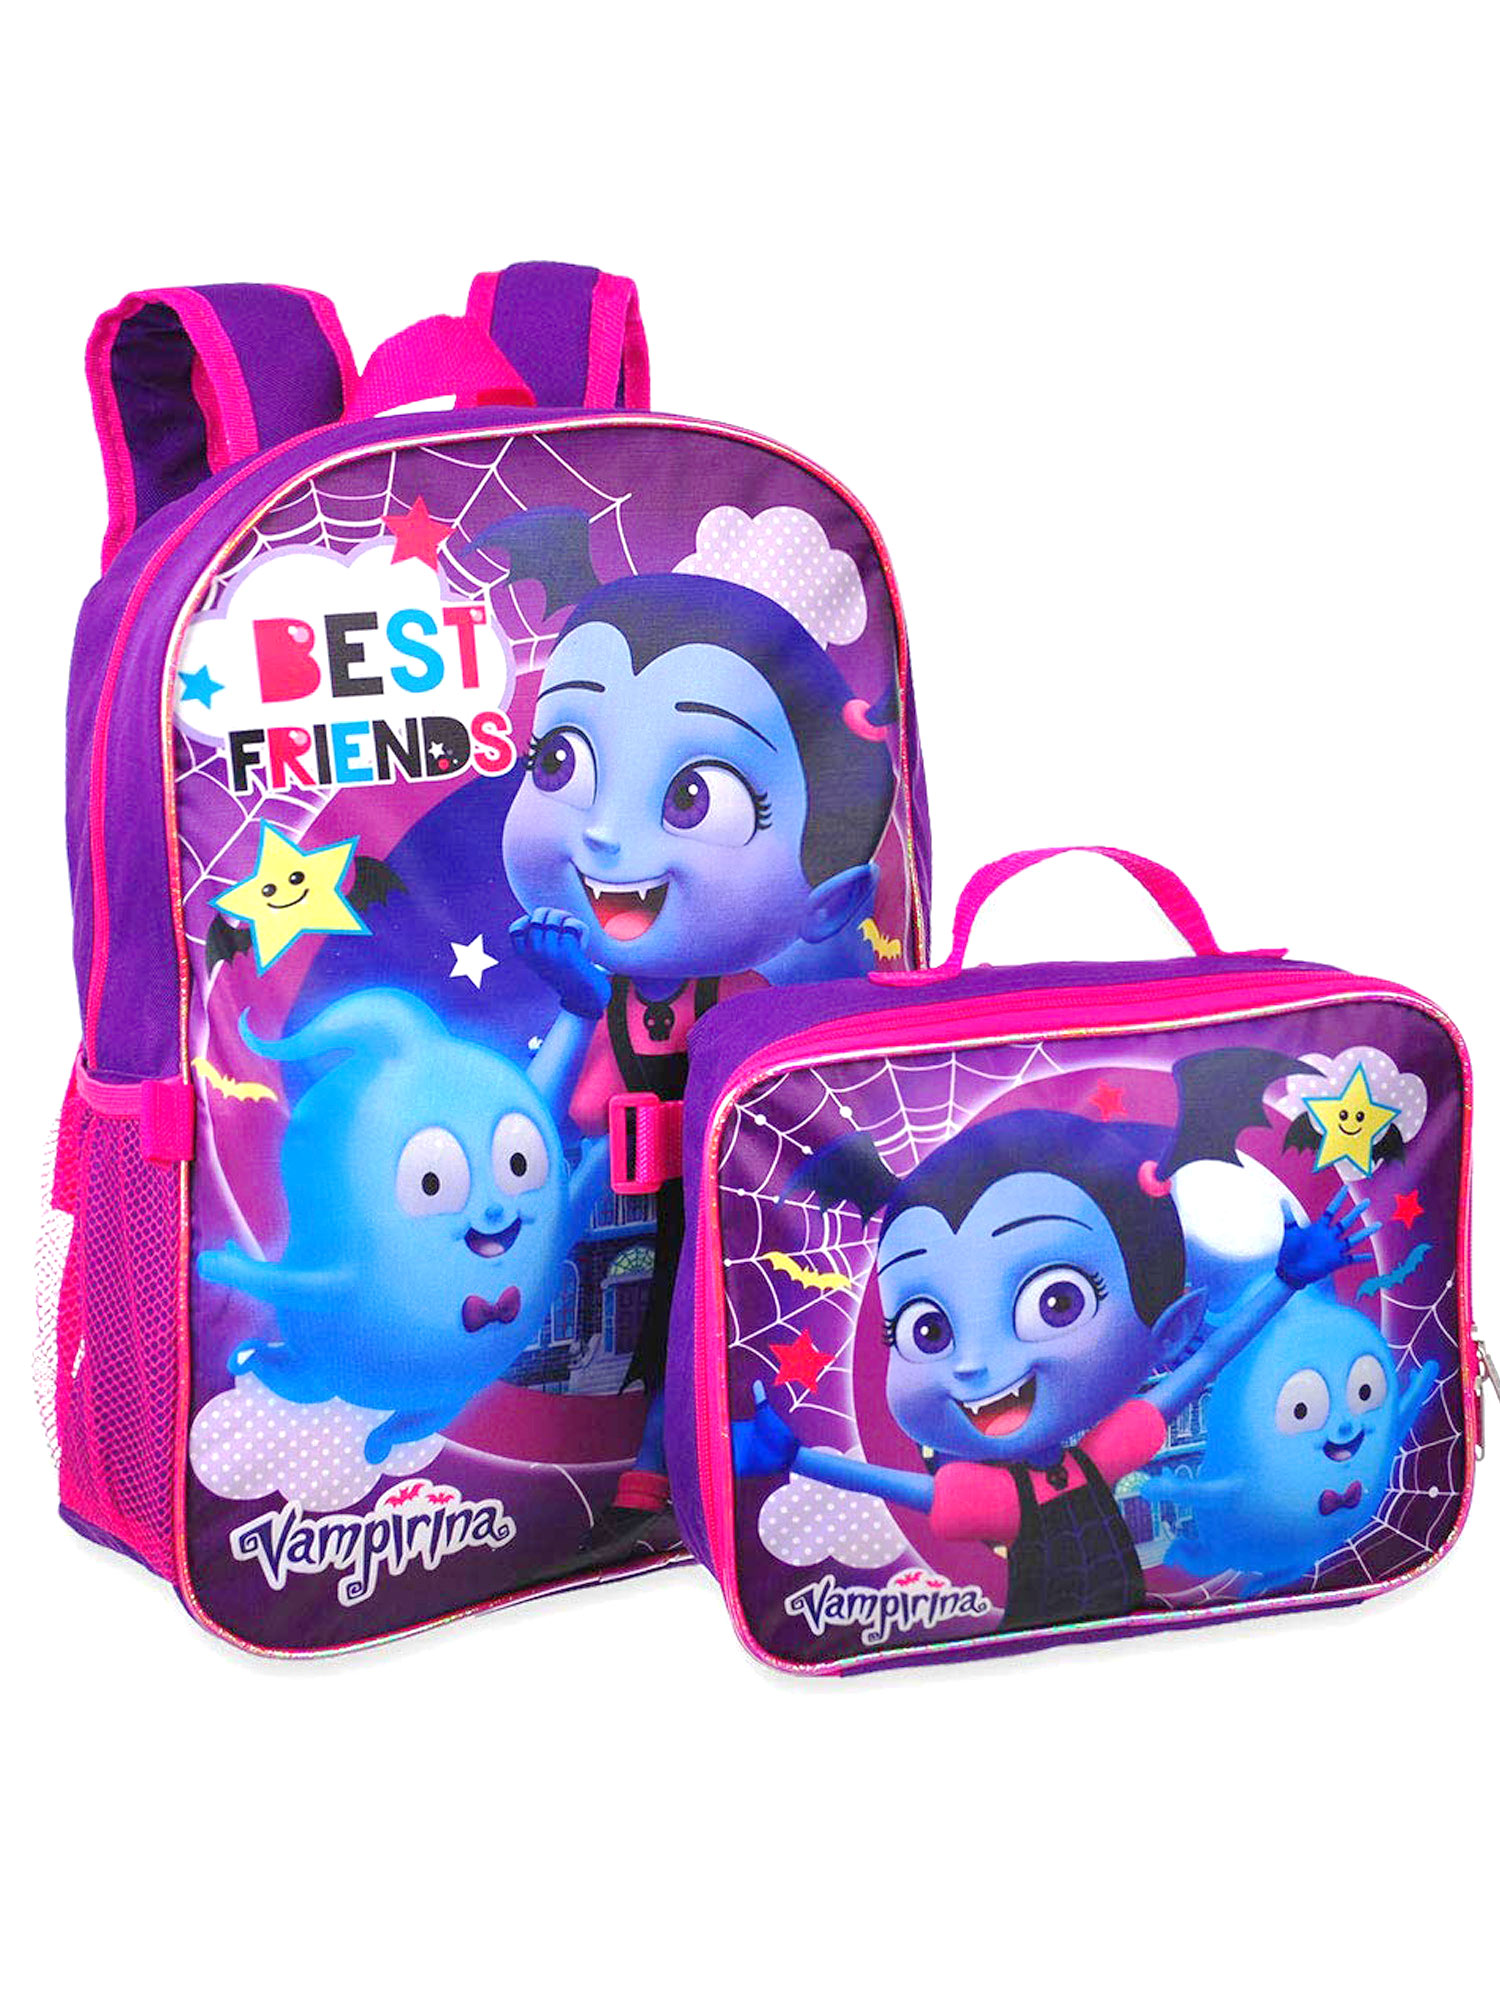 Girls Vampirina Best Friends Backpack 16" w/ Detachable Lunch Bag Purple - image 3 of 6